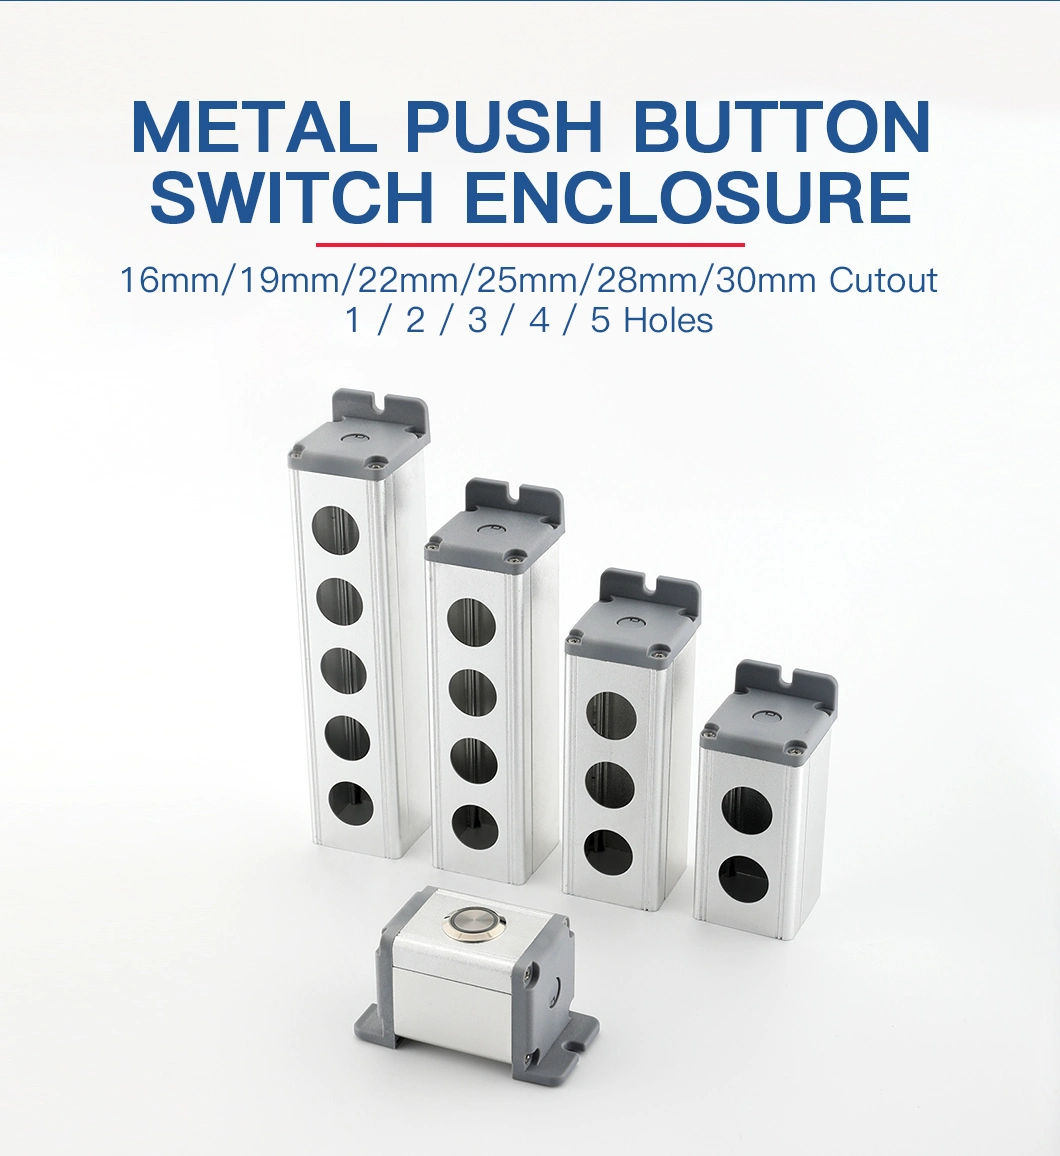 10mm Mimiture 1no1nc 3pin Self Locking on off Mechanical Push Button Switch